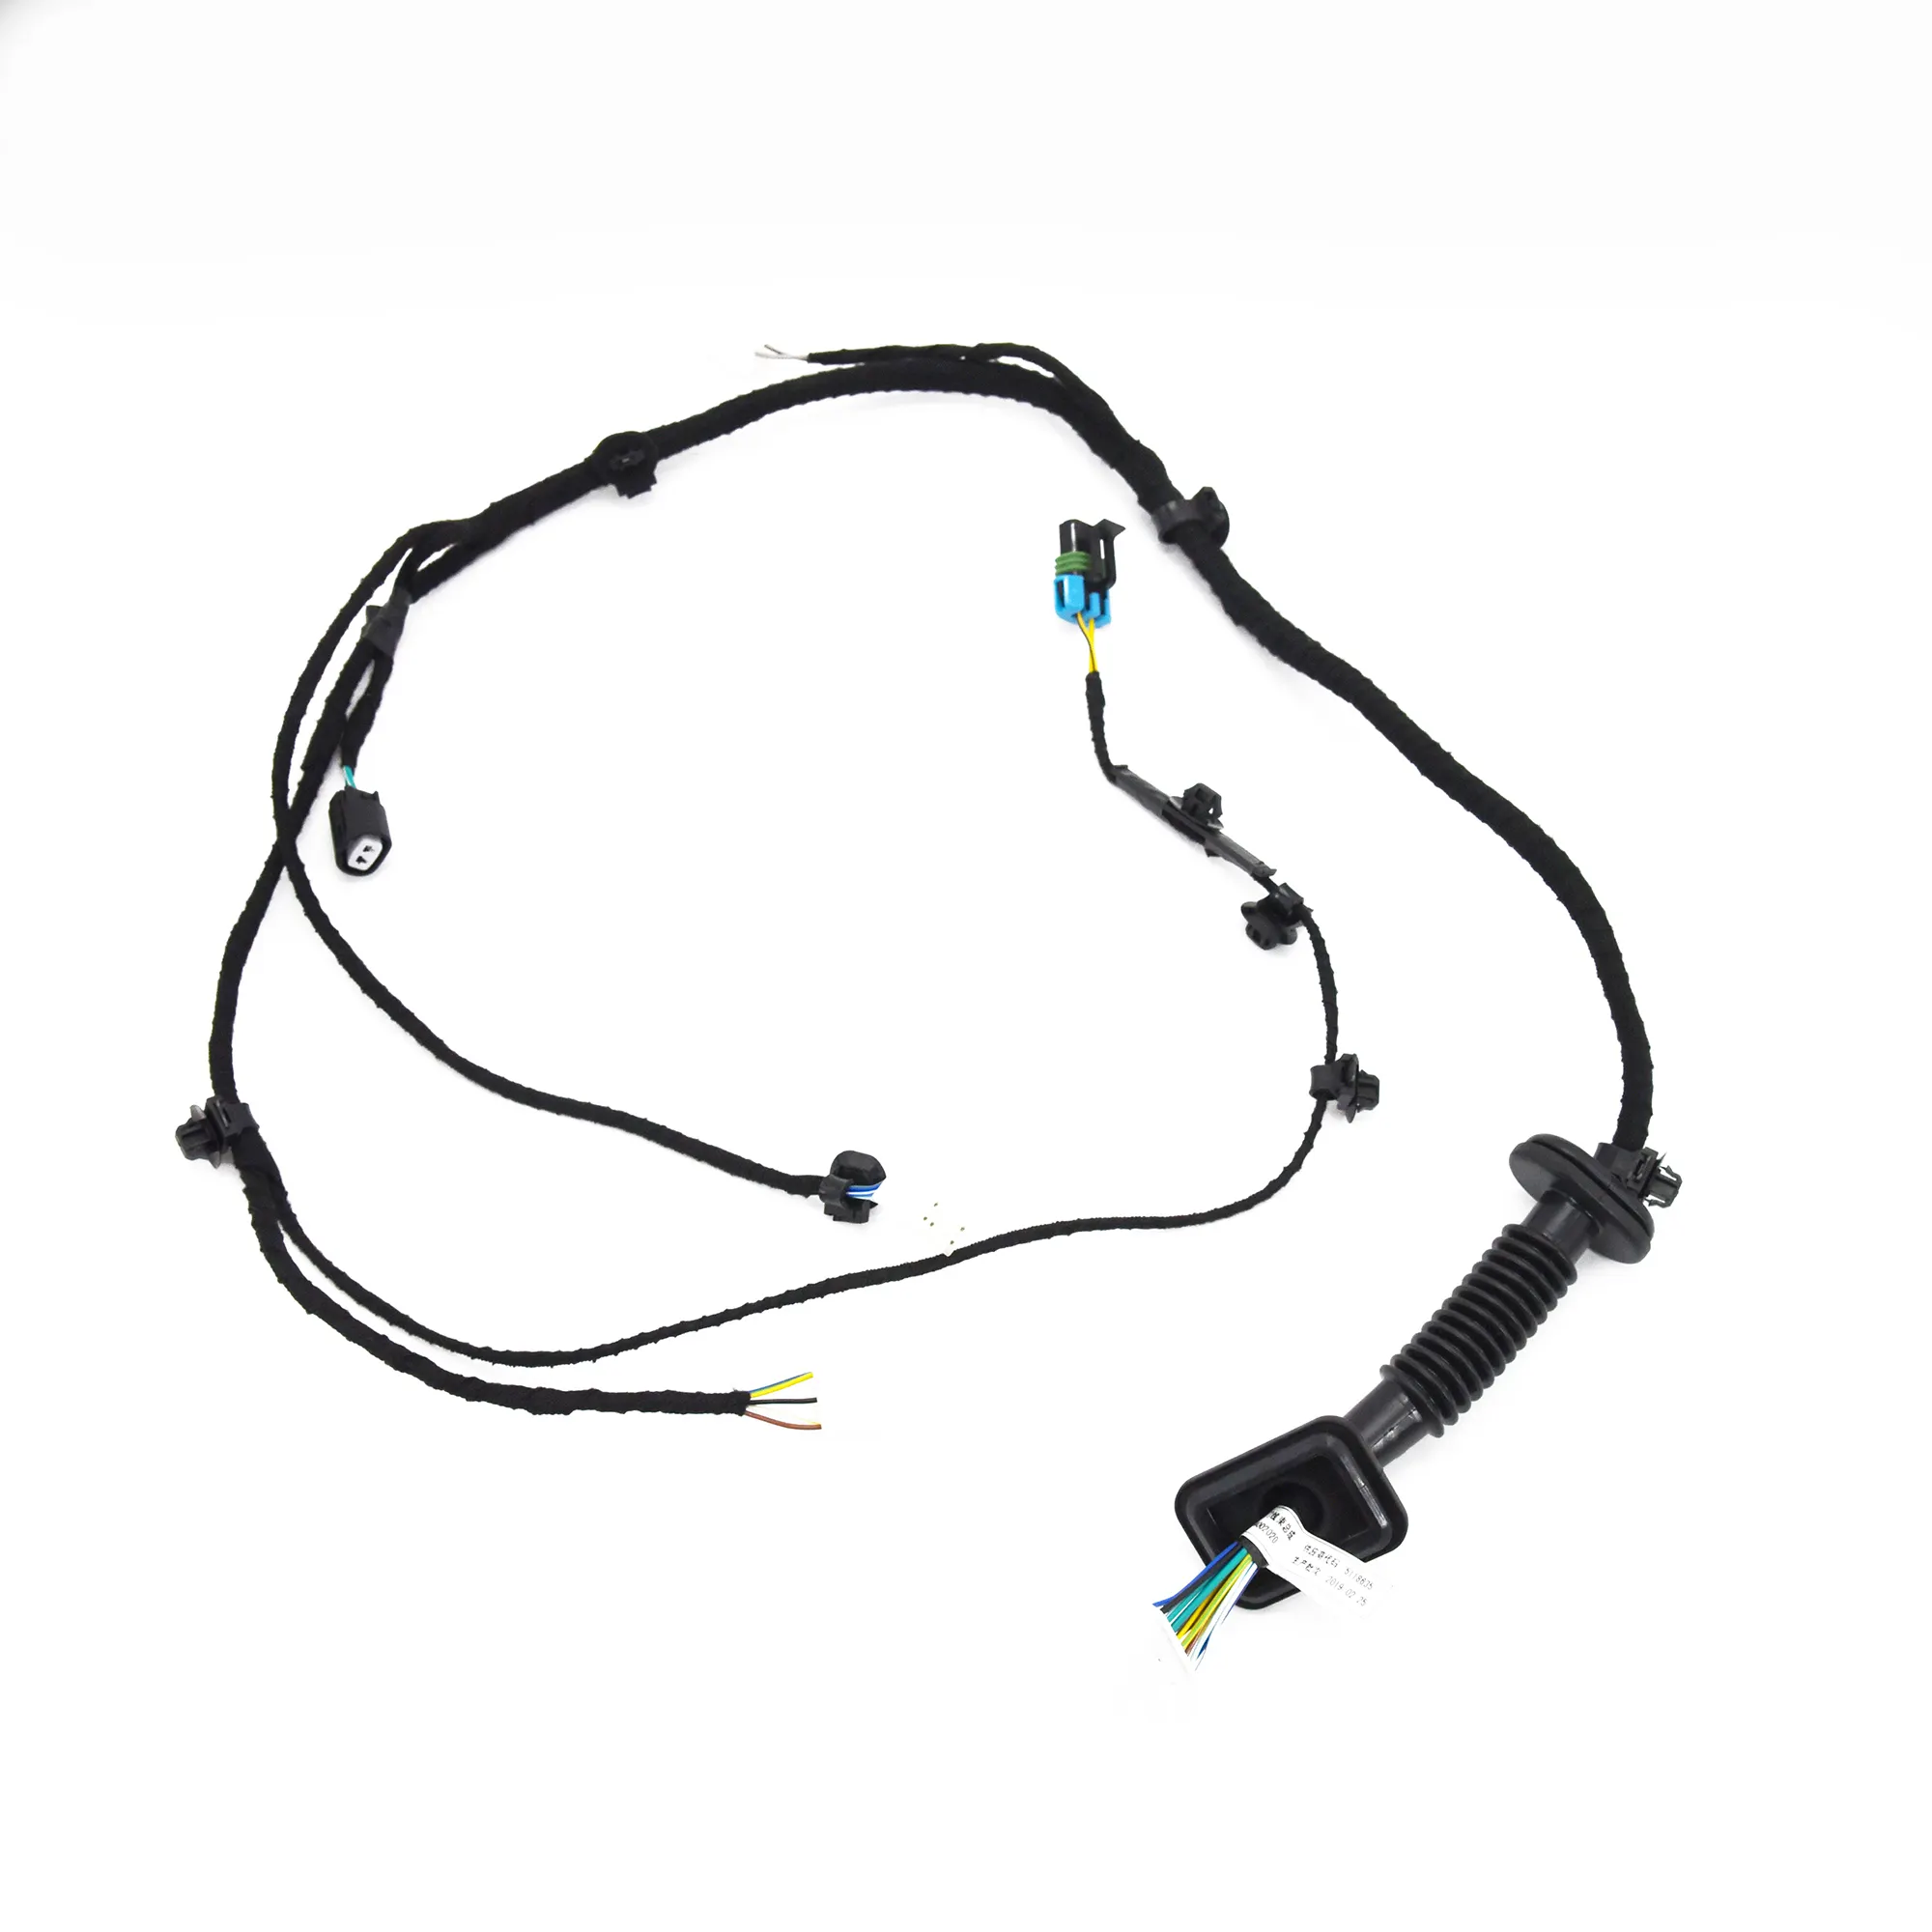 OEM ODM harnes kawat Audio mobil otomotif harnes kabel Stereo Harness steker daya